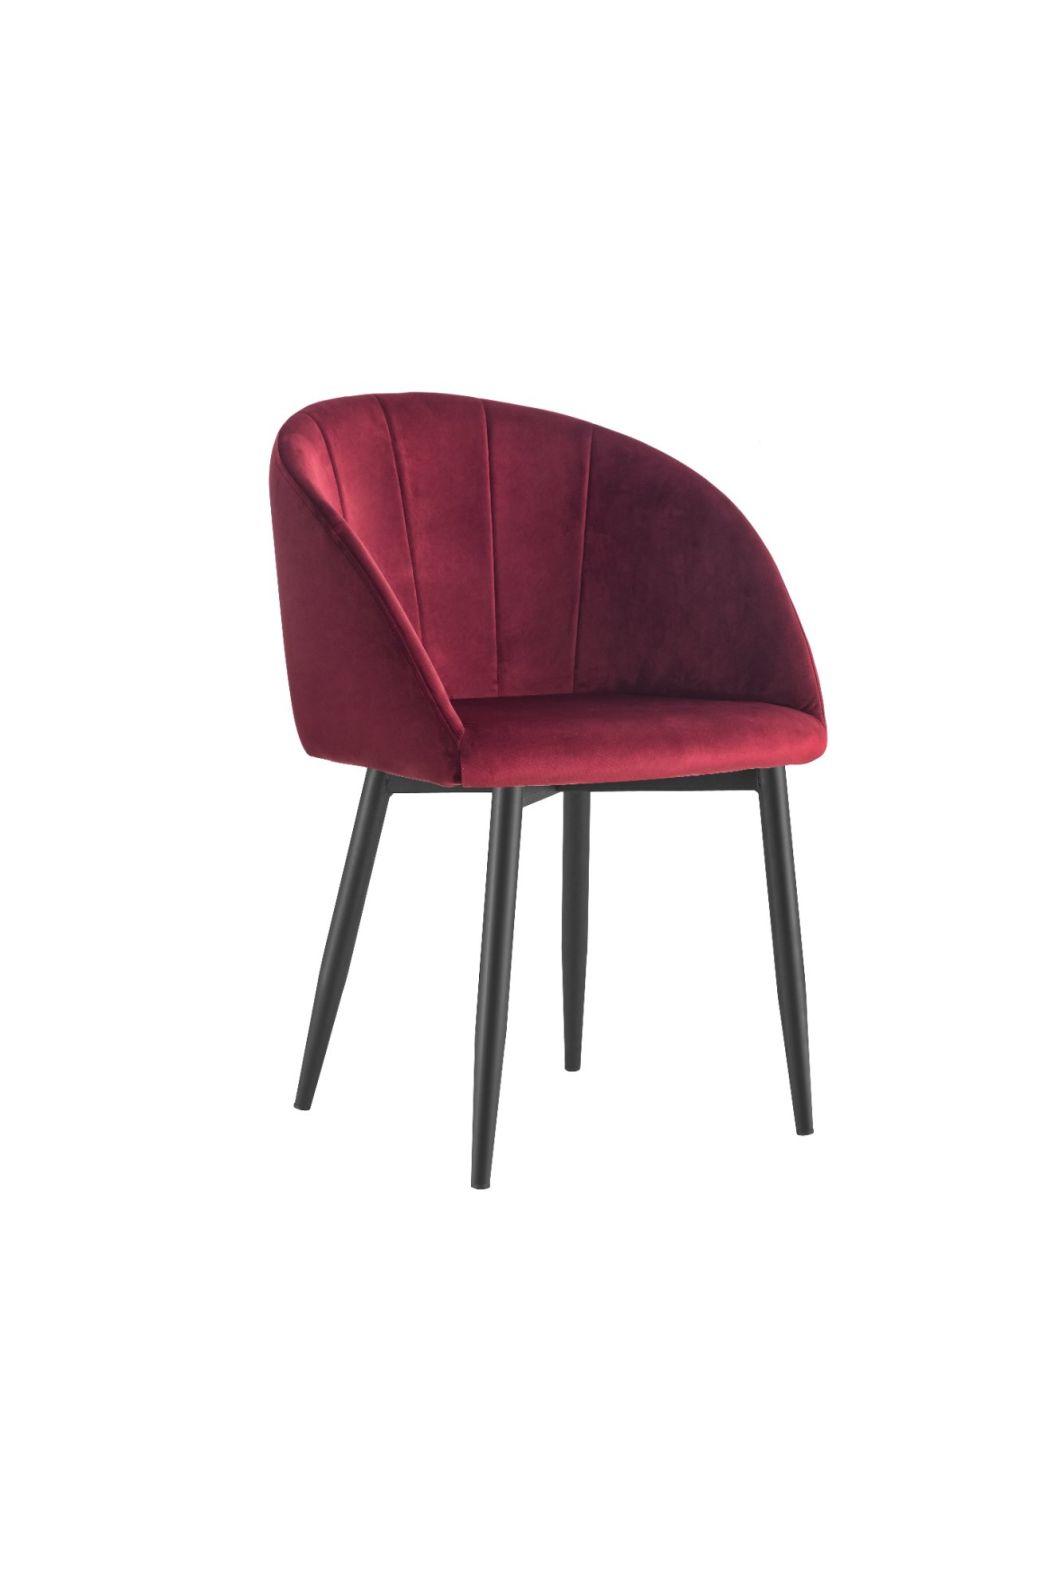 Hotel Home Restaurant Red Fabric Velvet Modern Tufted Fabric Dining Chair